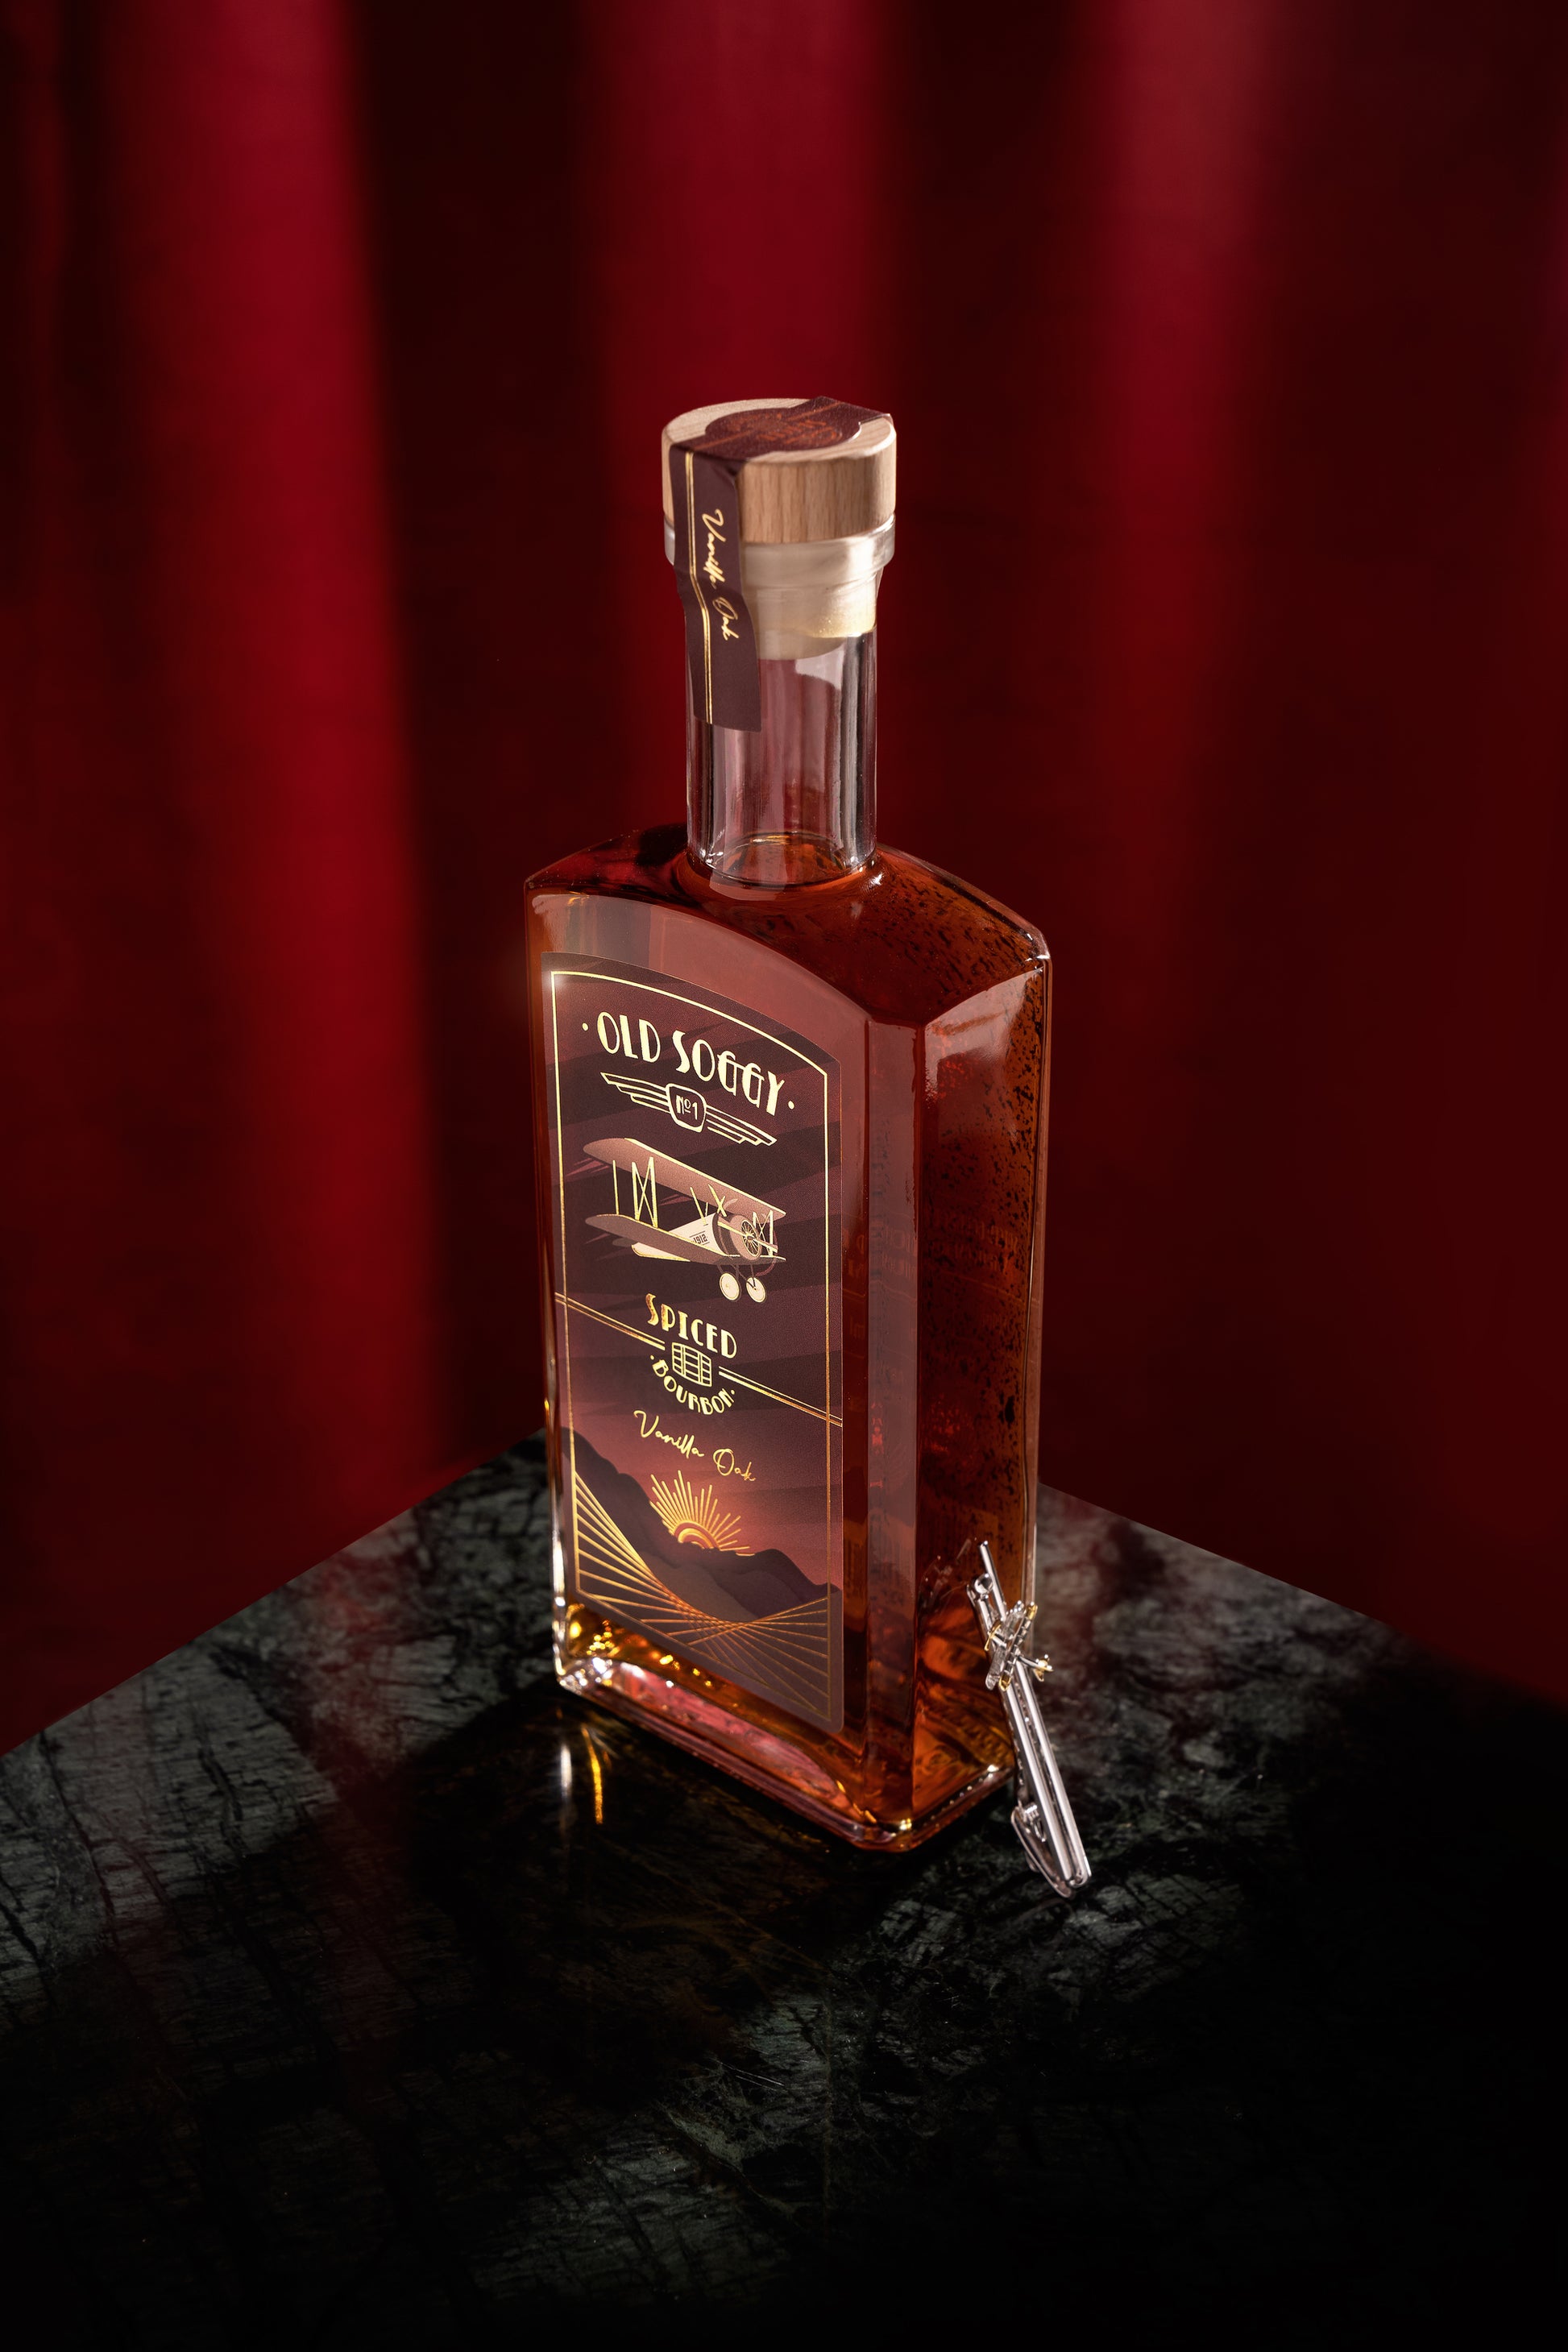 Old Soggy Spiced Bourbon